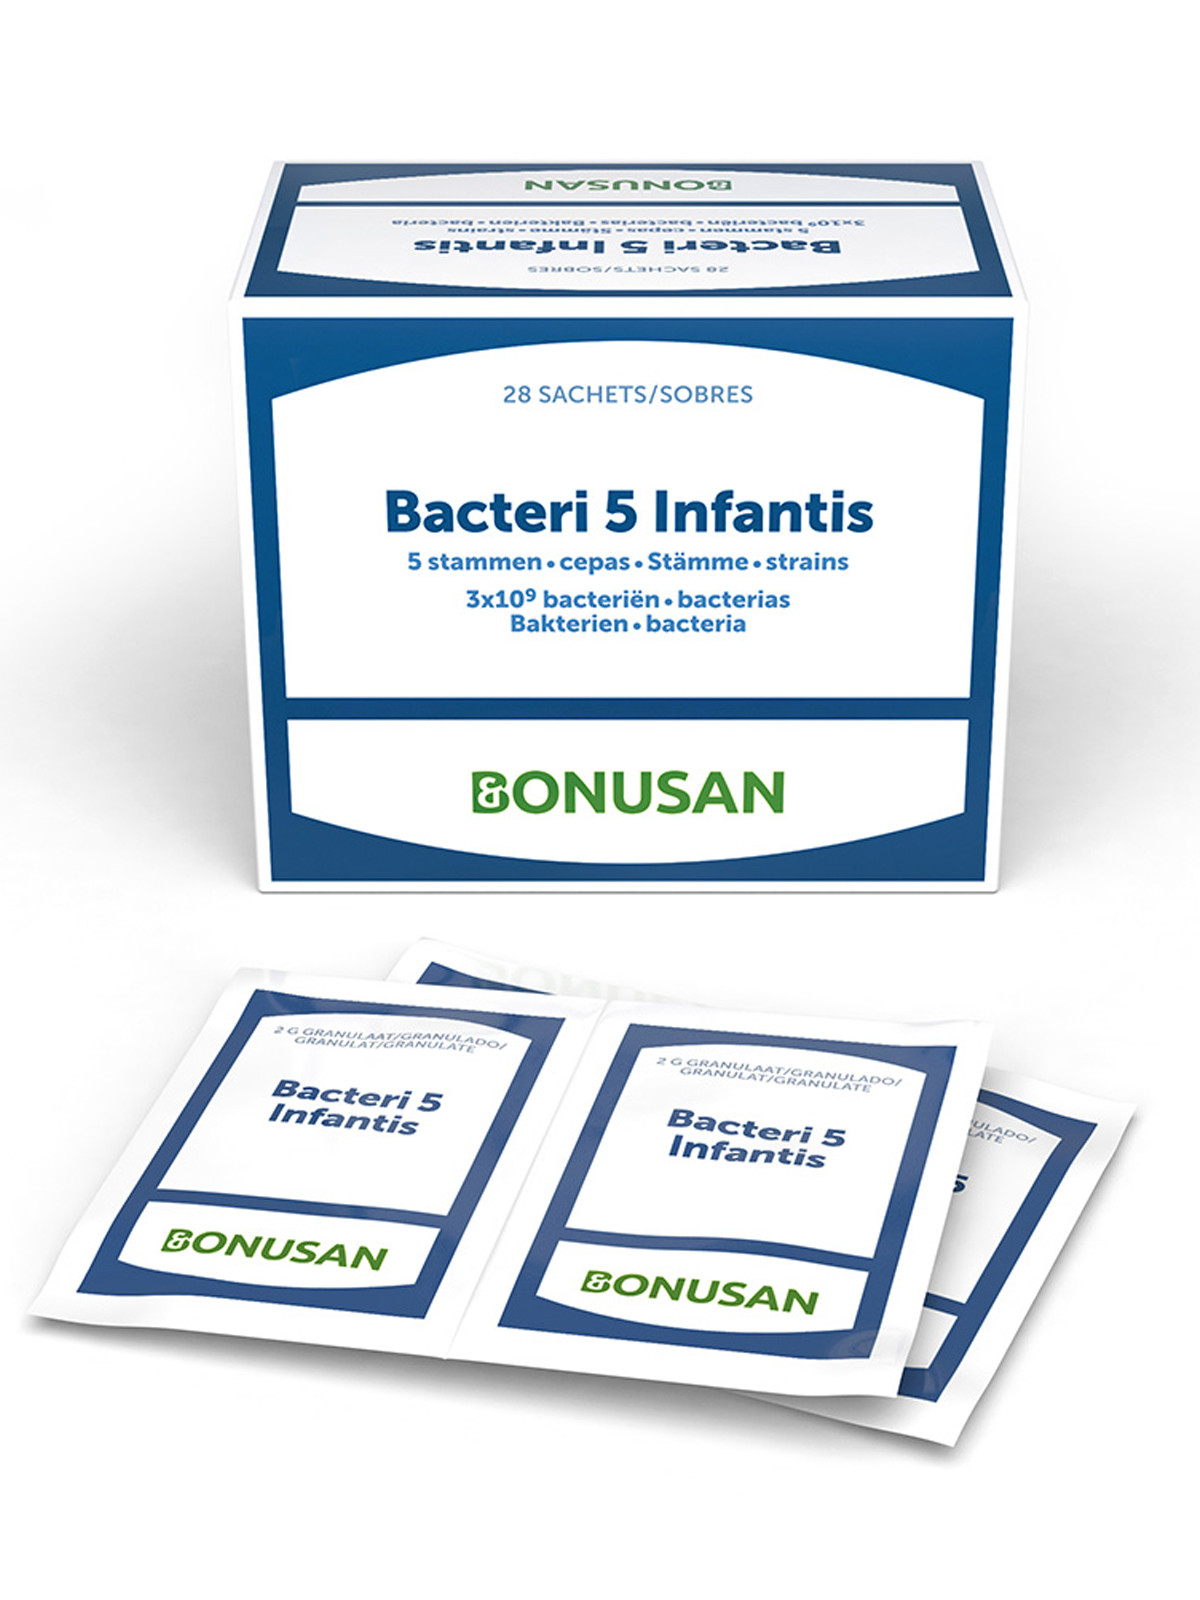 Bonusan - Bacteri 5 Infantis (voorheen Darmocare Infantis)